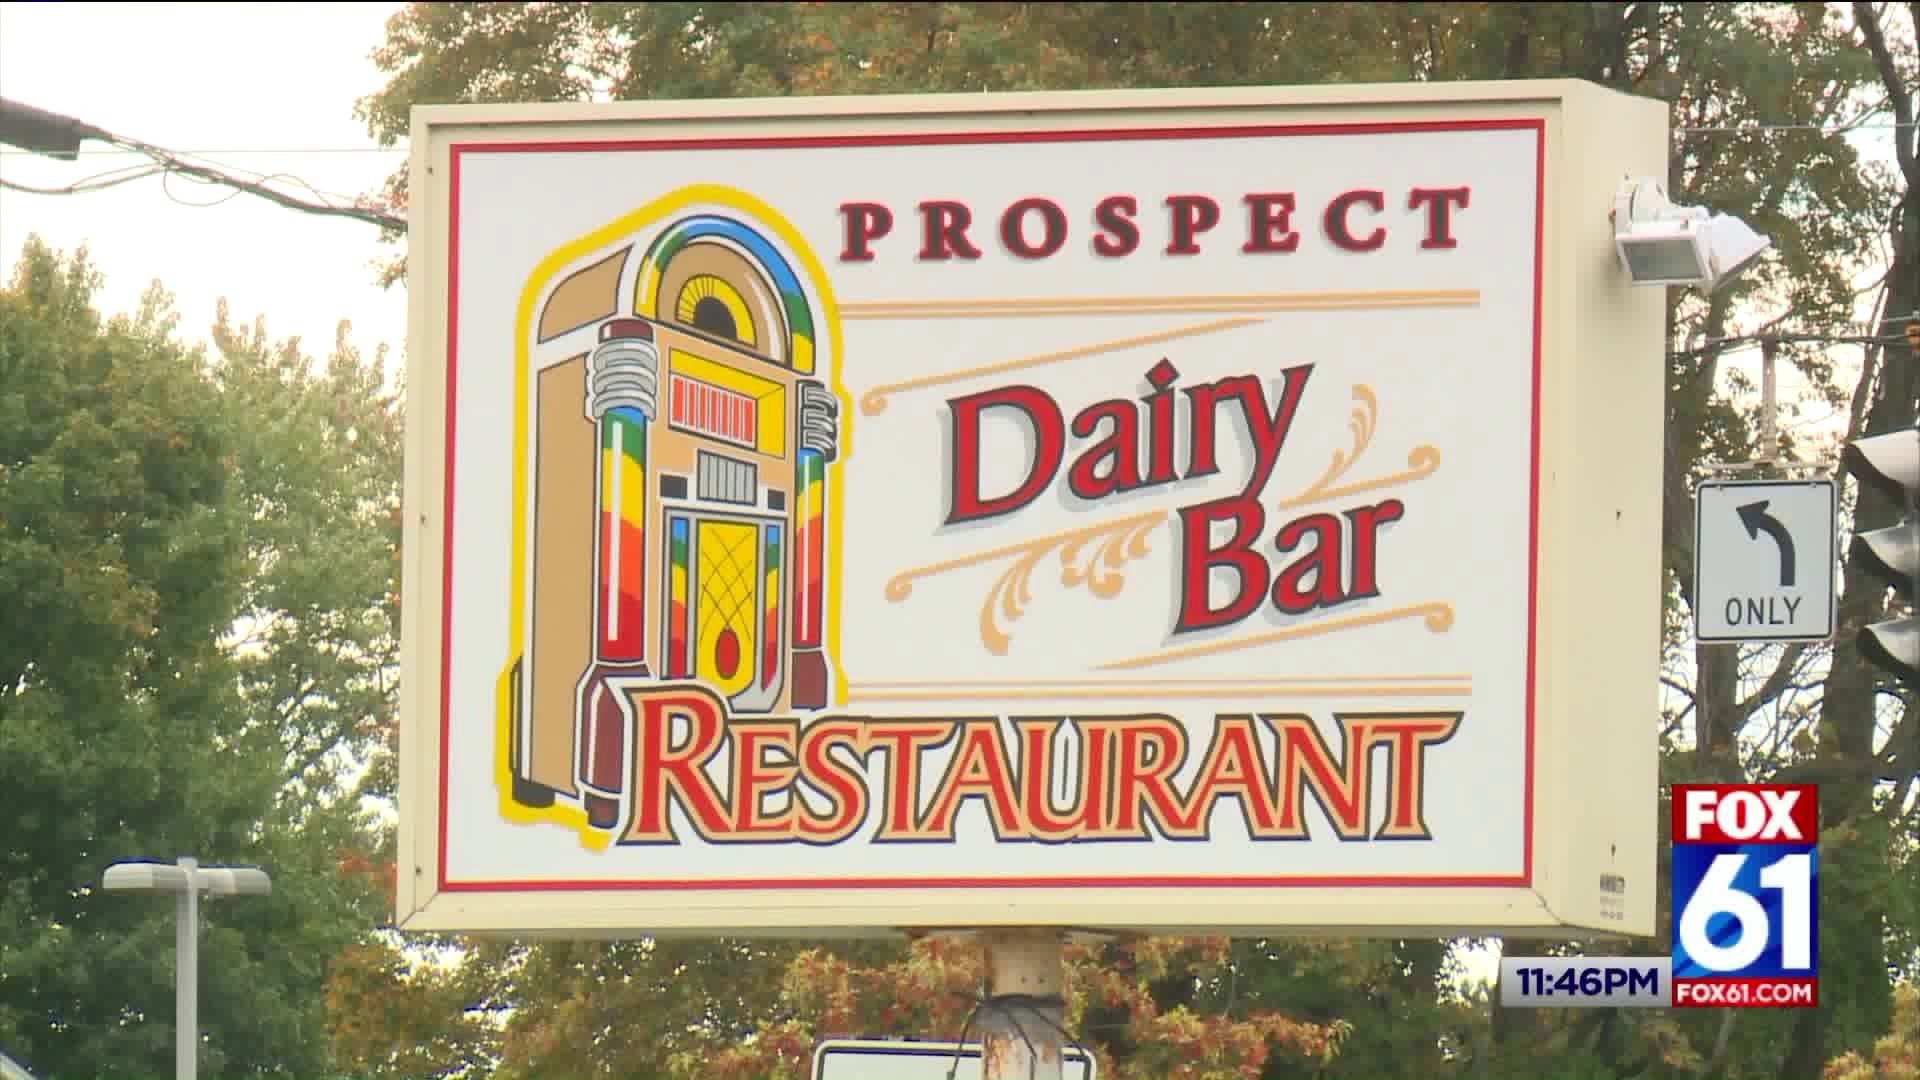 Prospect dairy bar